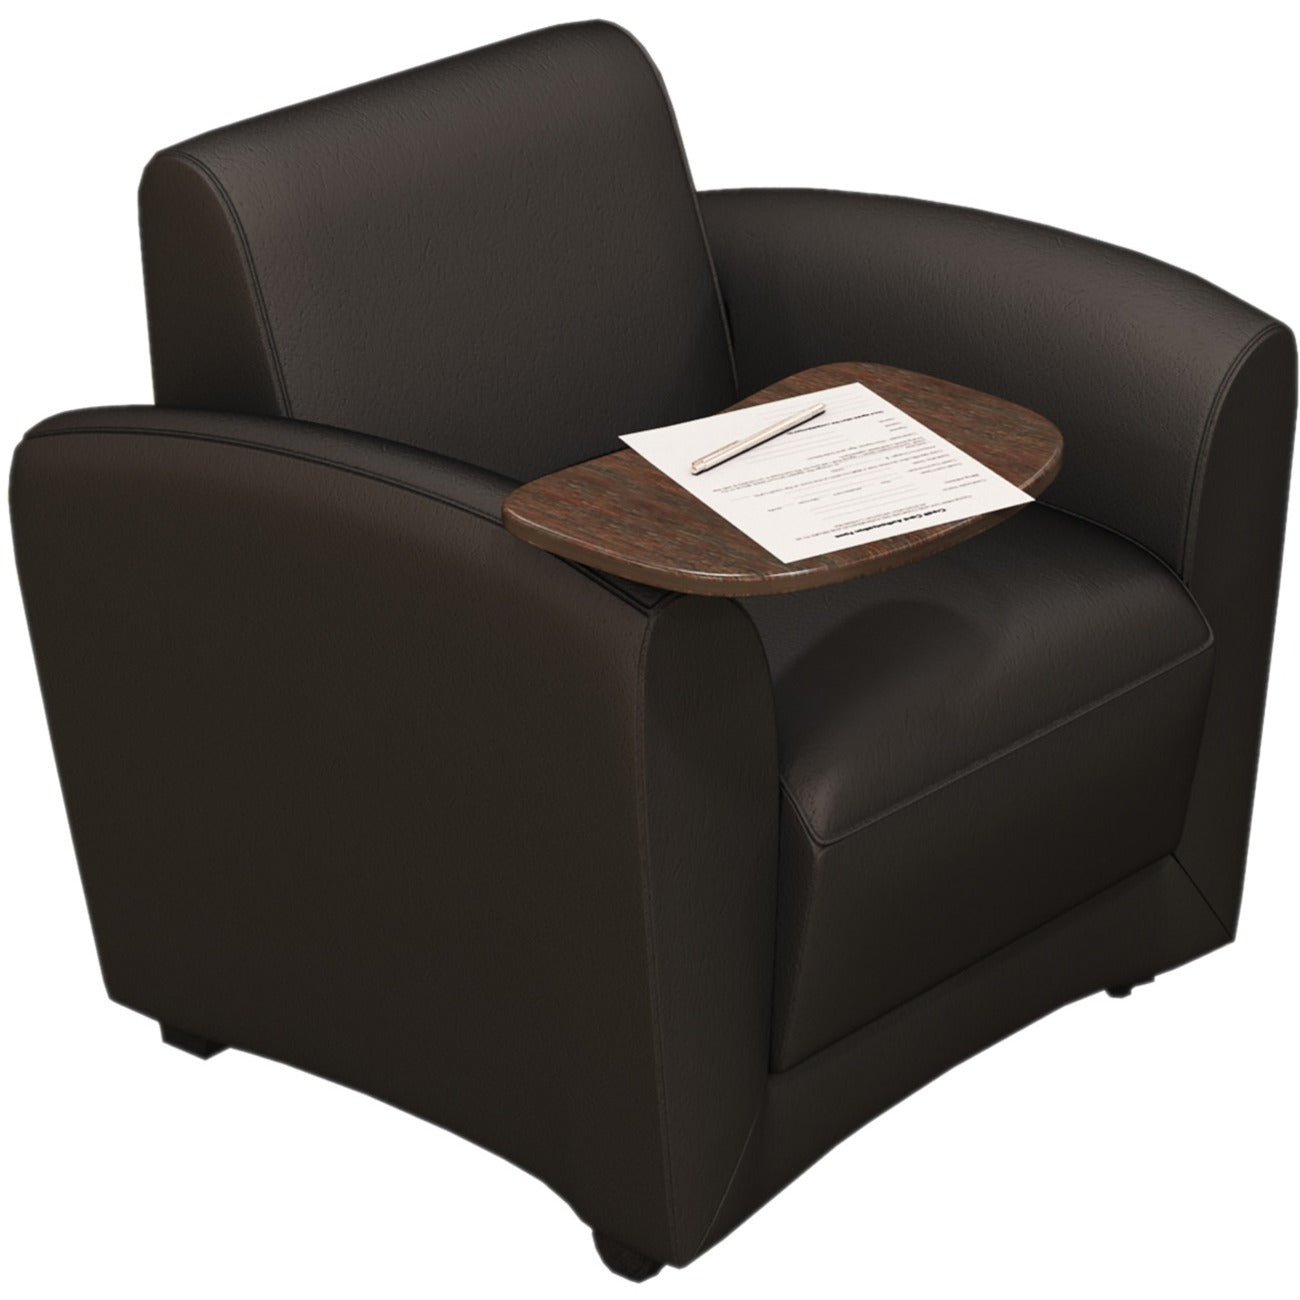 safco-santa-cruz-mobile-lounge-chair-with-tablet-black-leather-seat-black-leather-back-four-legged-base-armrest-1-each_safvccmtblk - 1